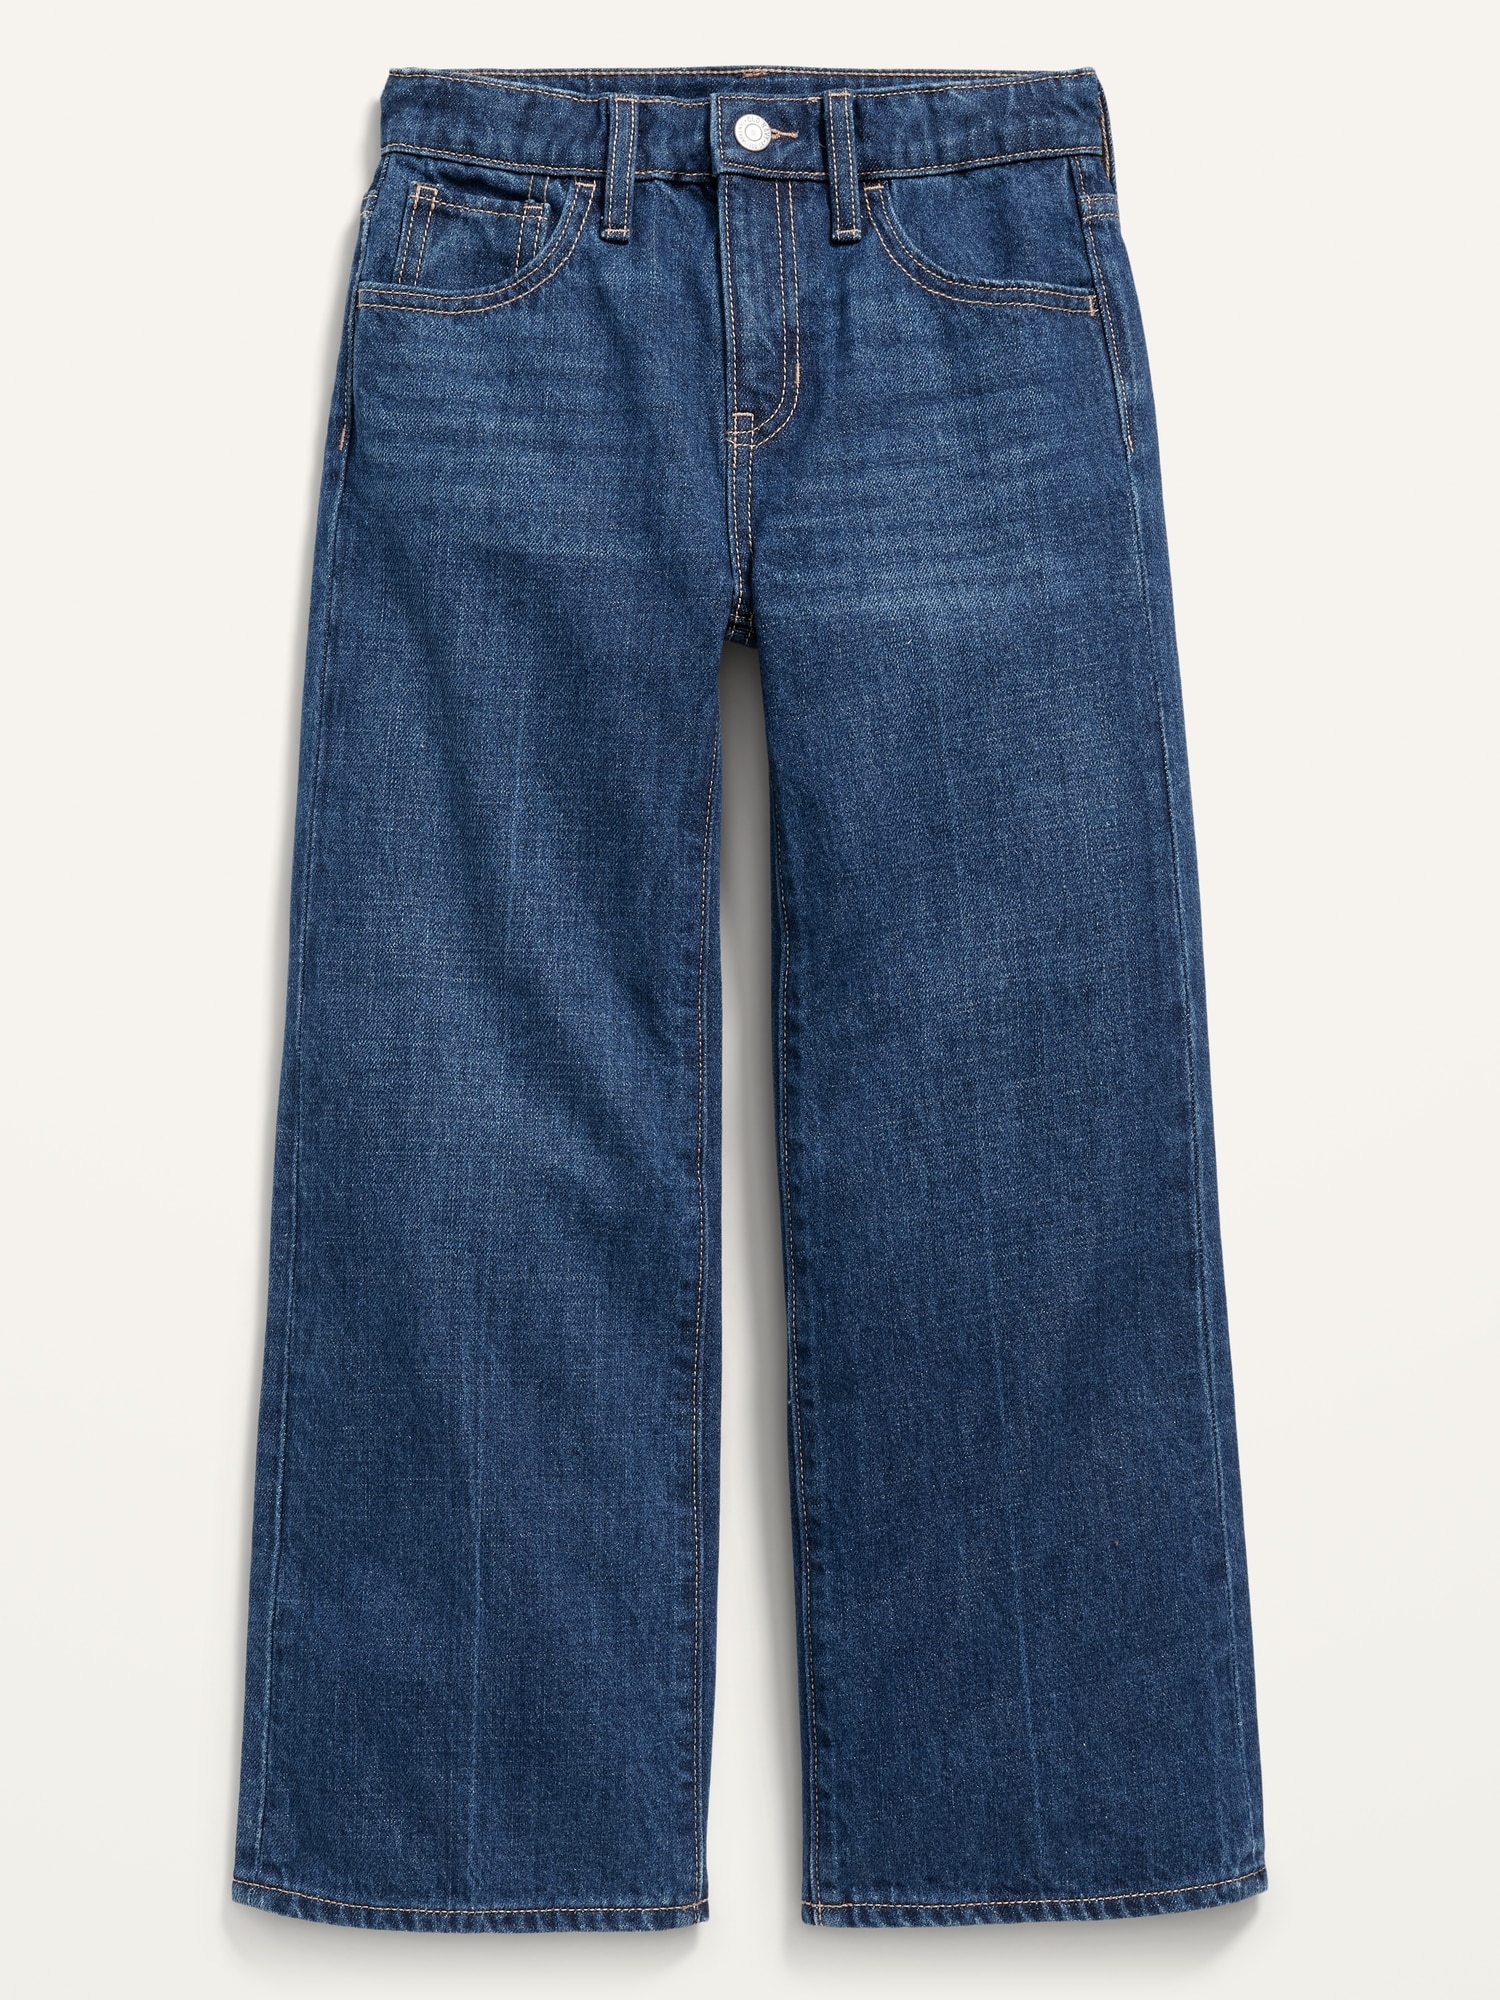 Deep Blue-Denim Girls Jeans, Buy Online, Skin Friendly